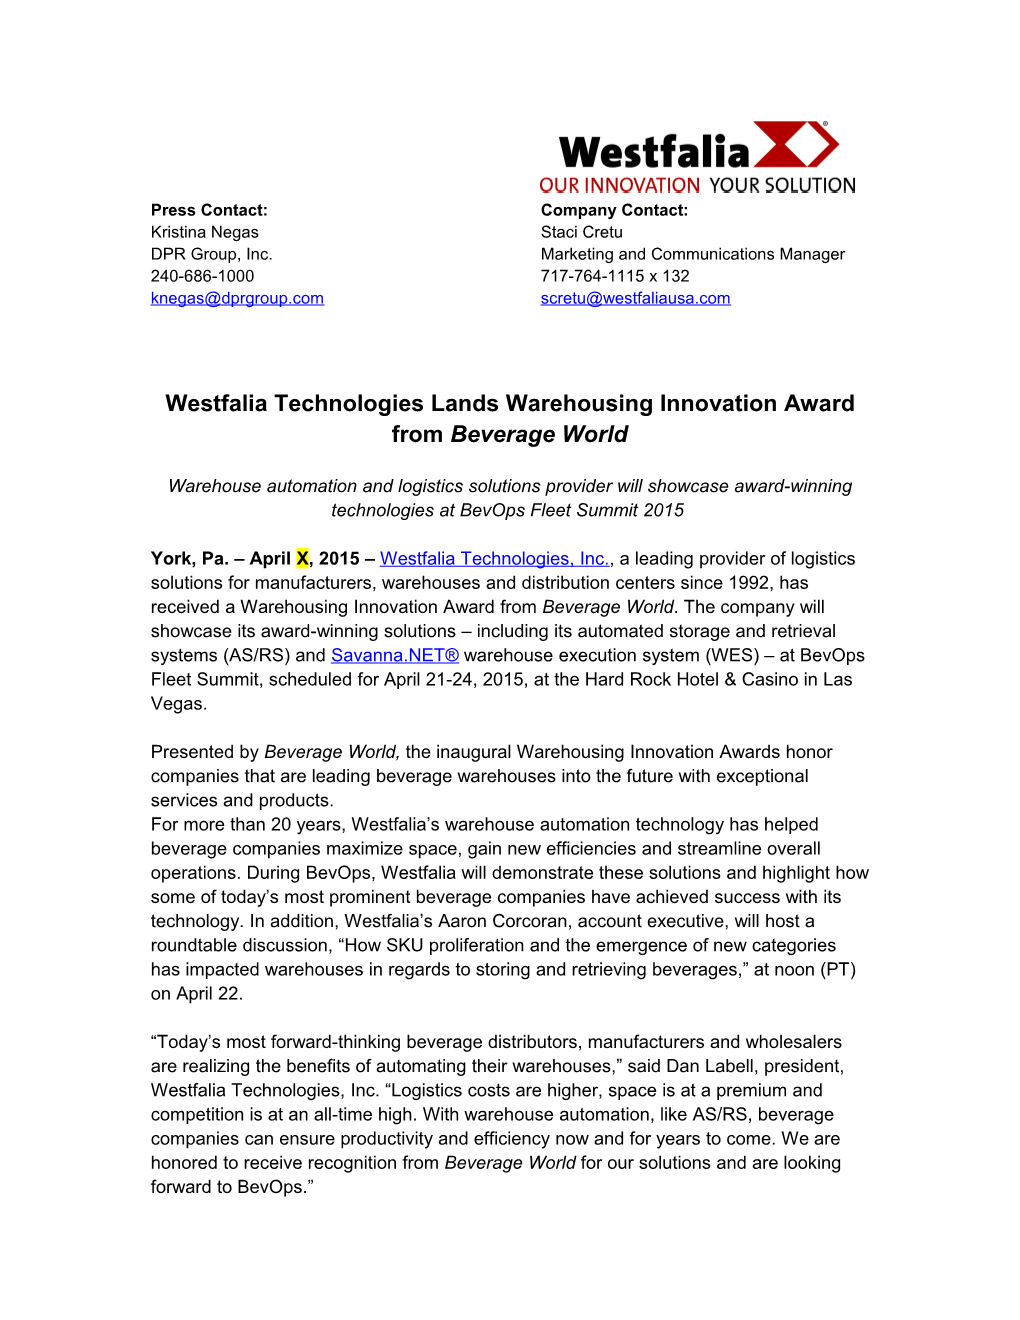 Westfalia Technologies Lands Warehousing Innovation Award from Beverage World